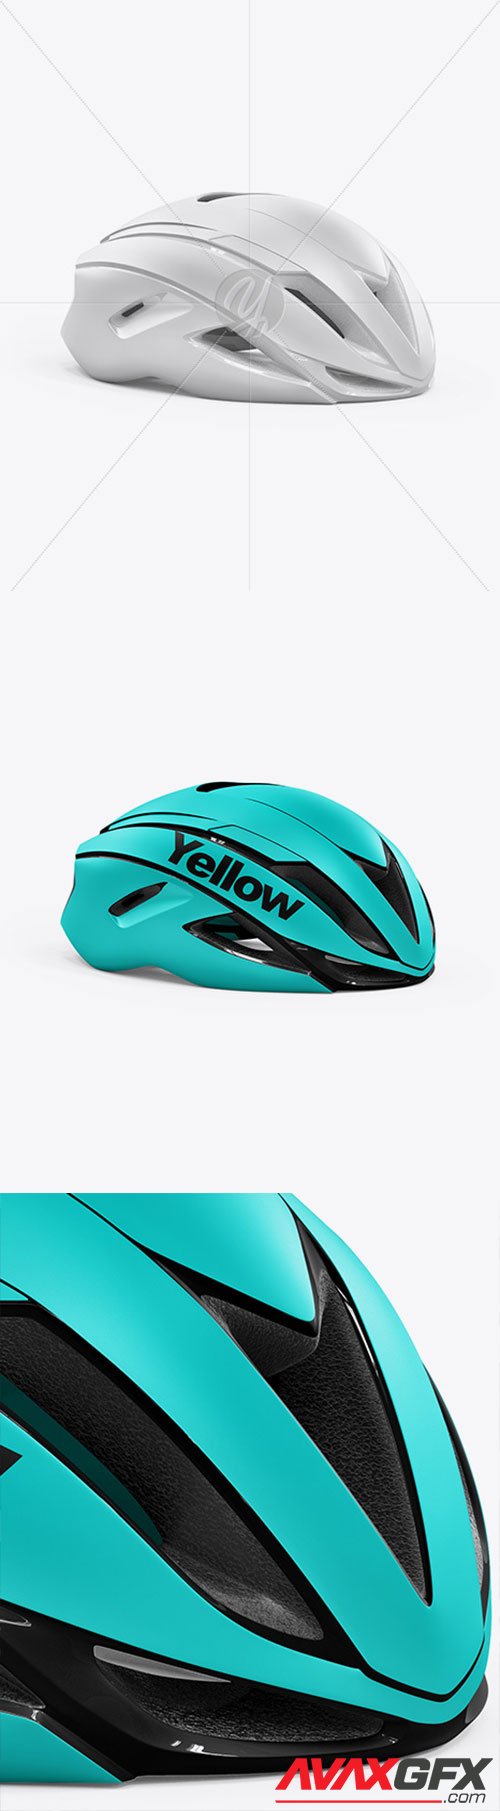 Cycling Helmet Mockup 33980